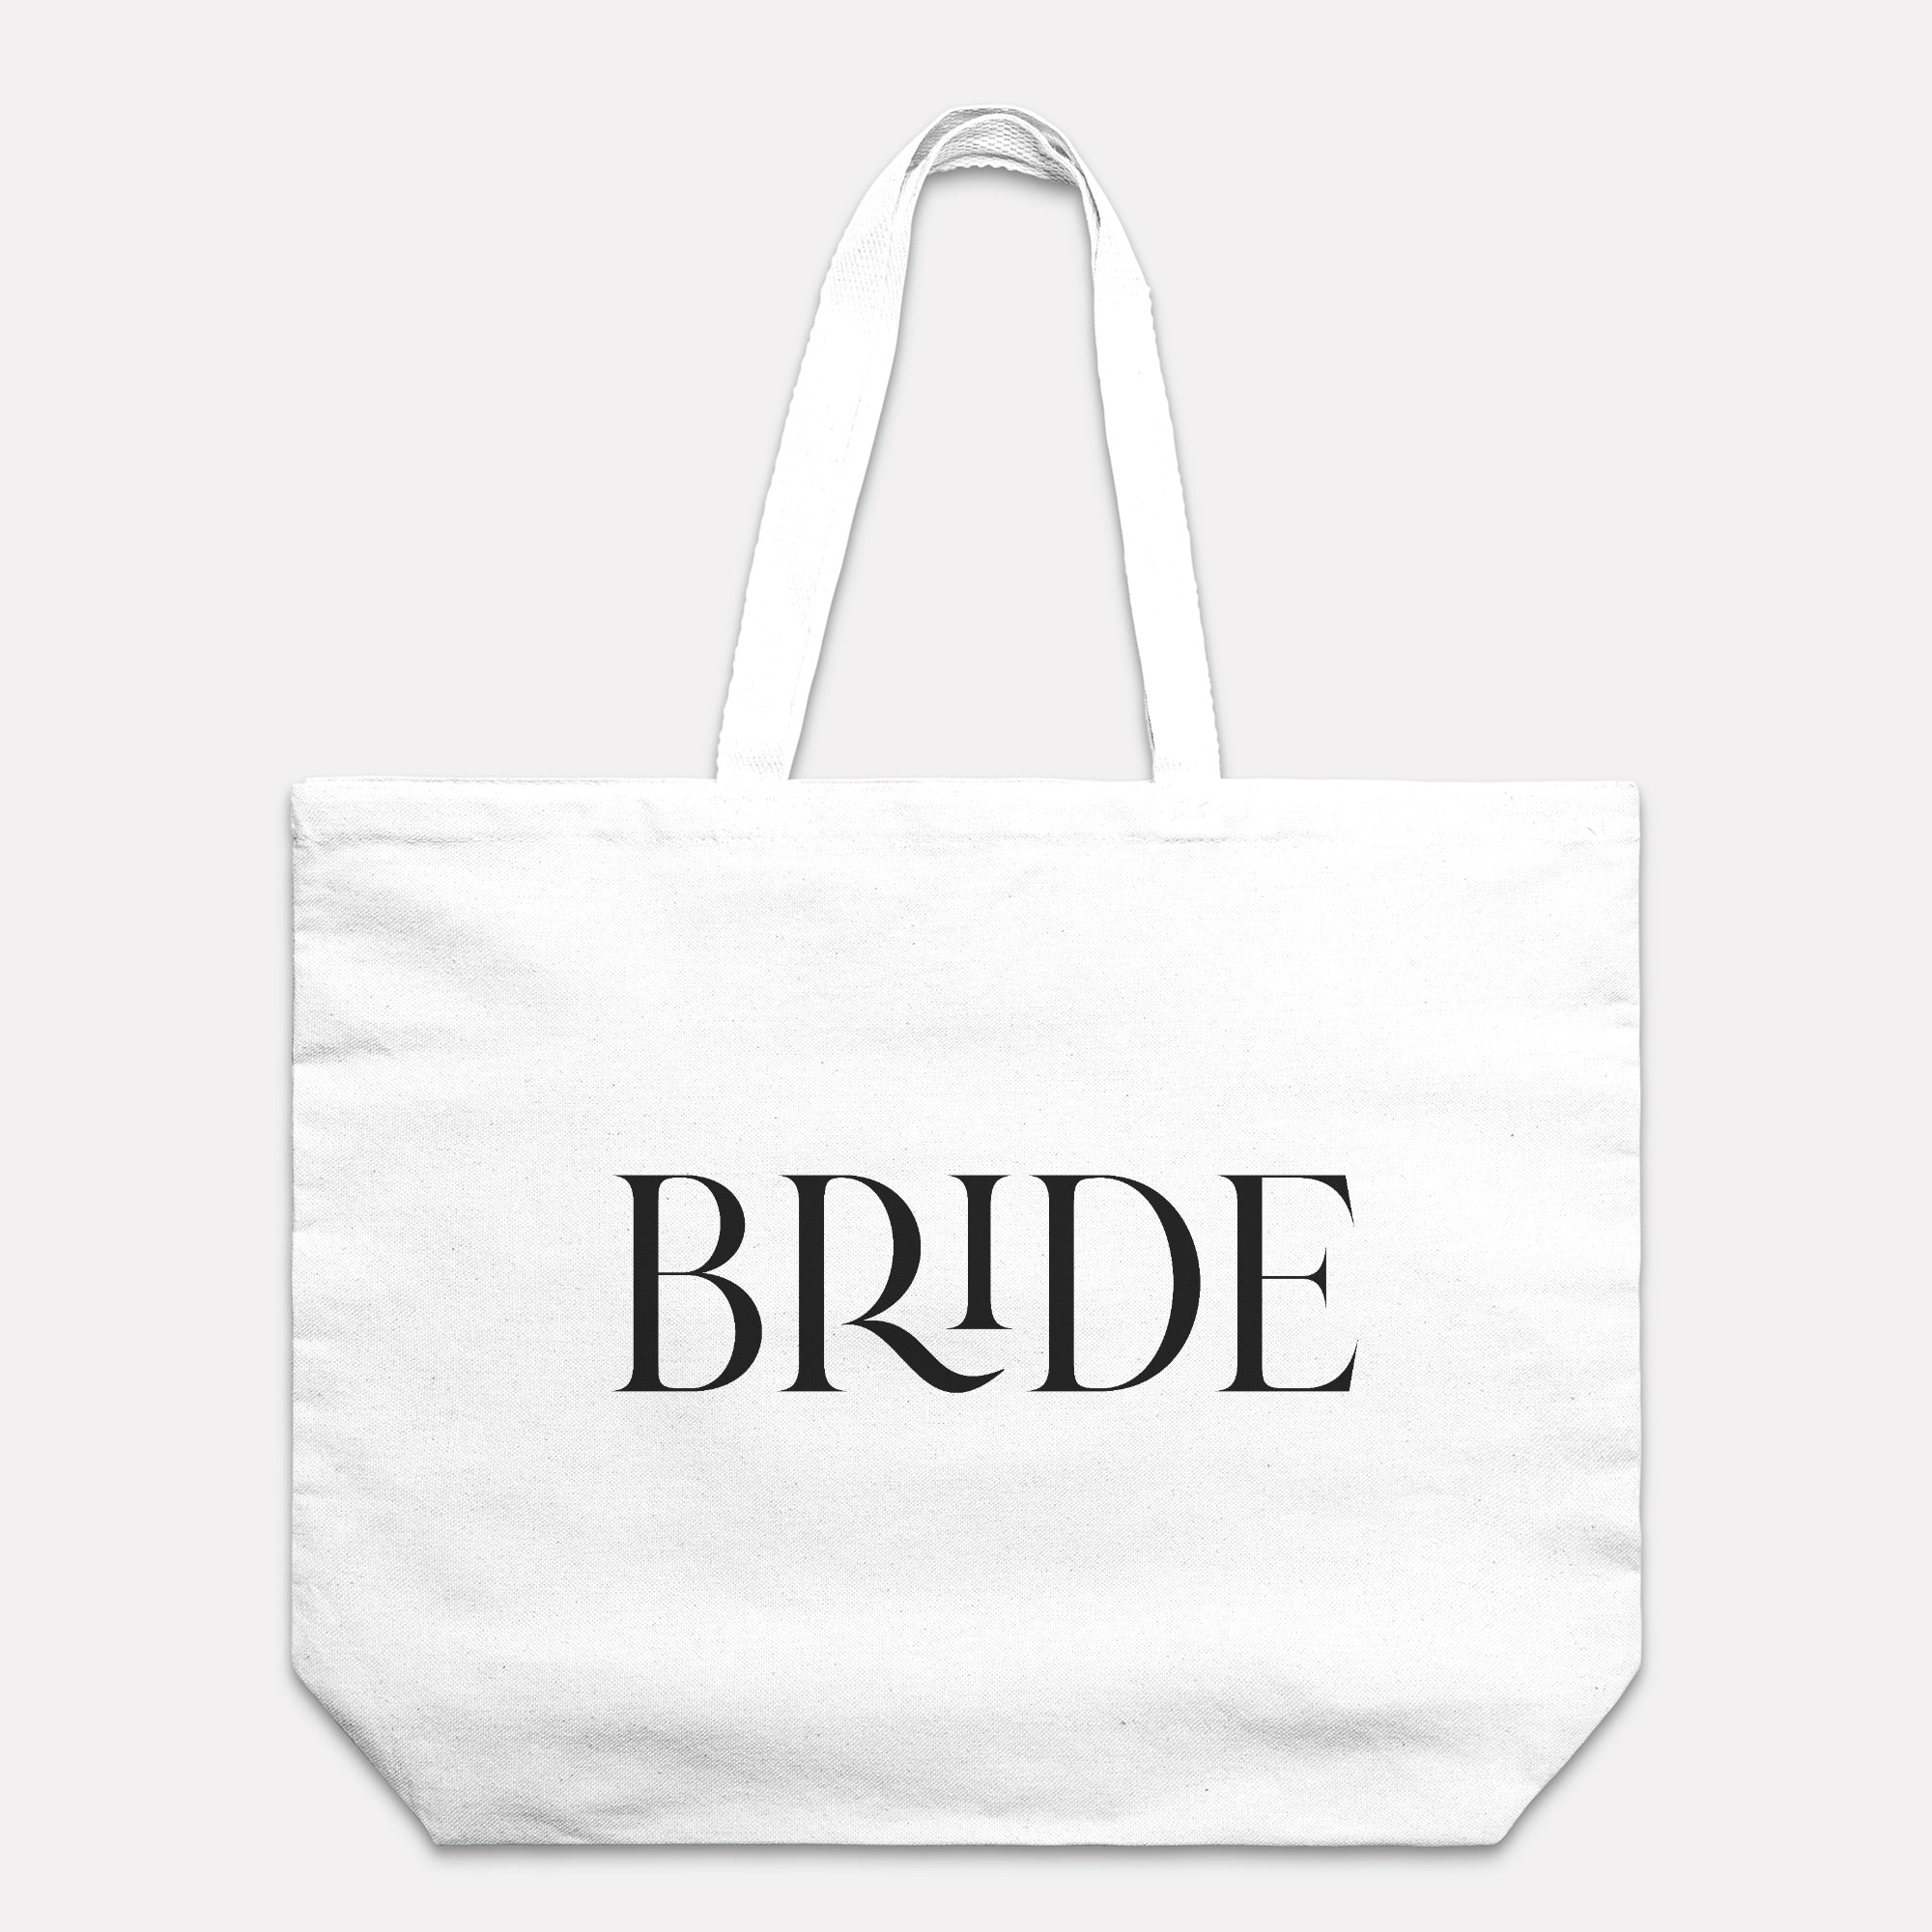 Bride Tote, Oversized Tote Gift for Bride